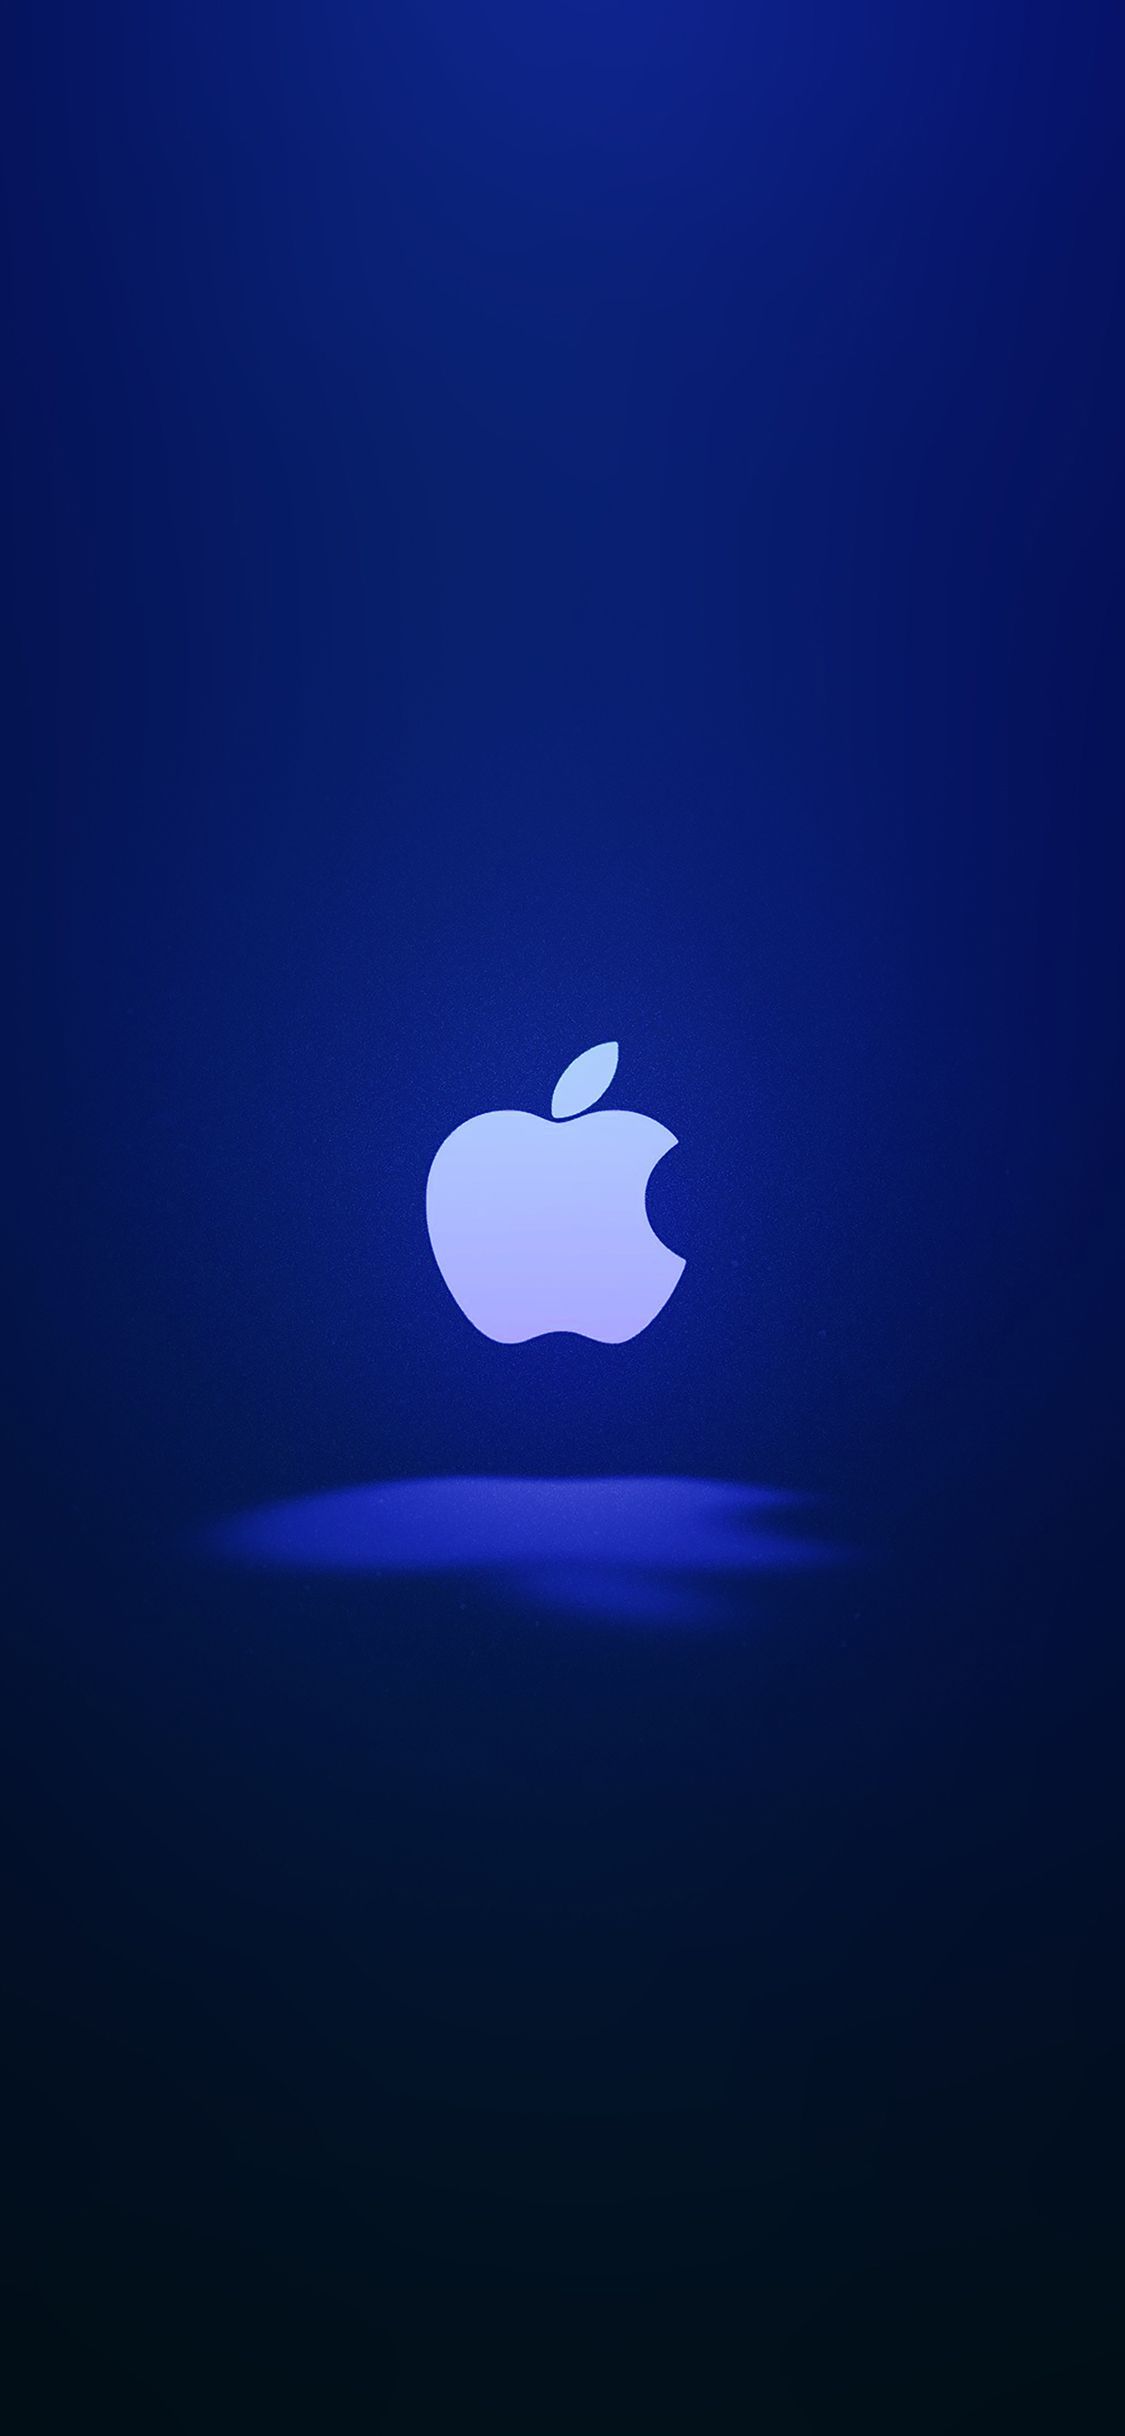 iPhone 12 Apple Logo Wallpaper. iPhone 12 Pro Max. iPhone 12. iPhone Wallpaper. iPad. Mac. Apple iphone wallpaper hd, iPhone wallpaper, Apple logo wallpaper